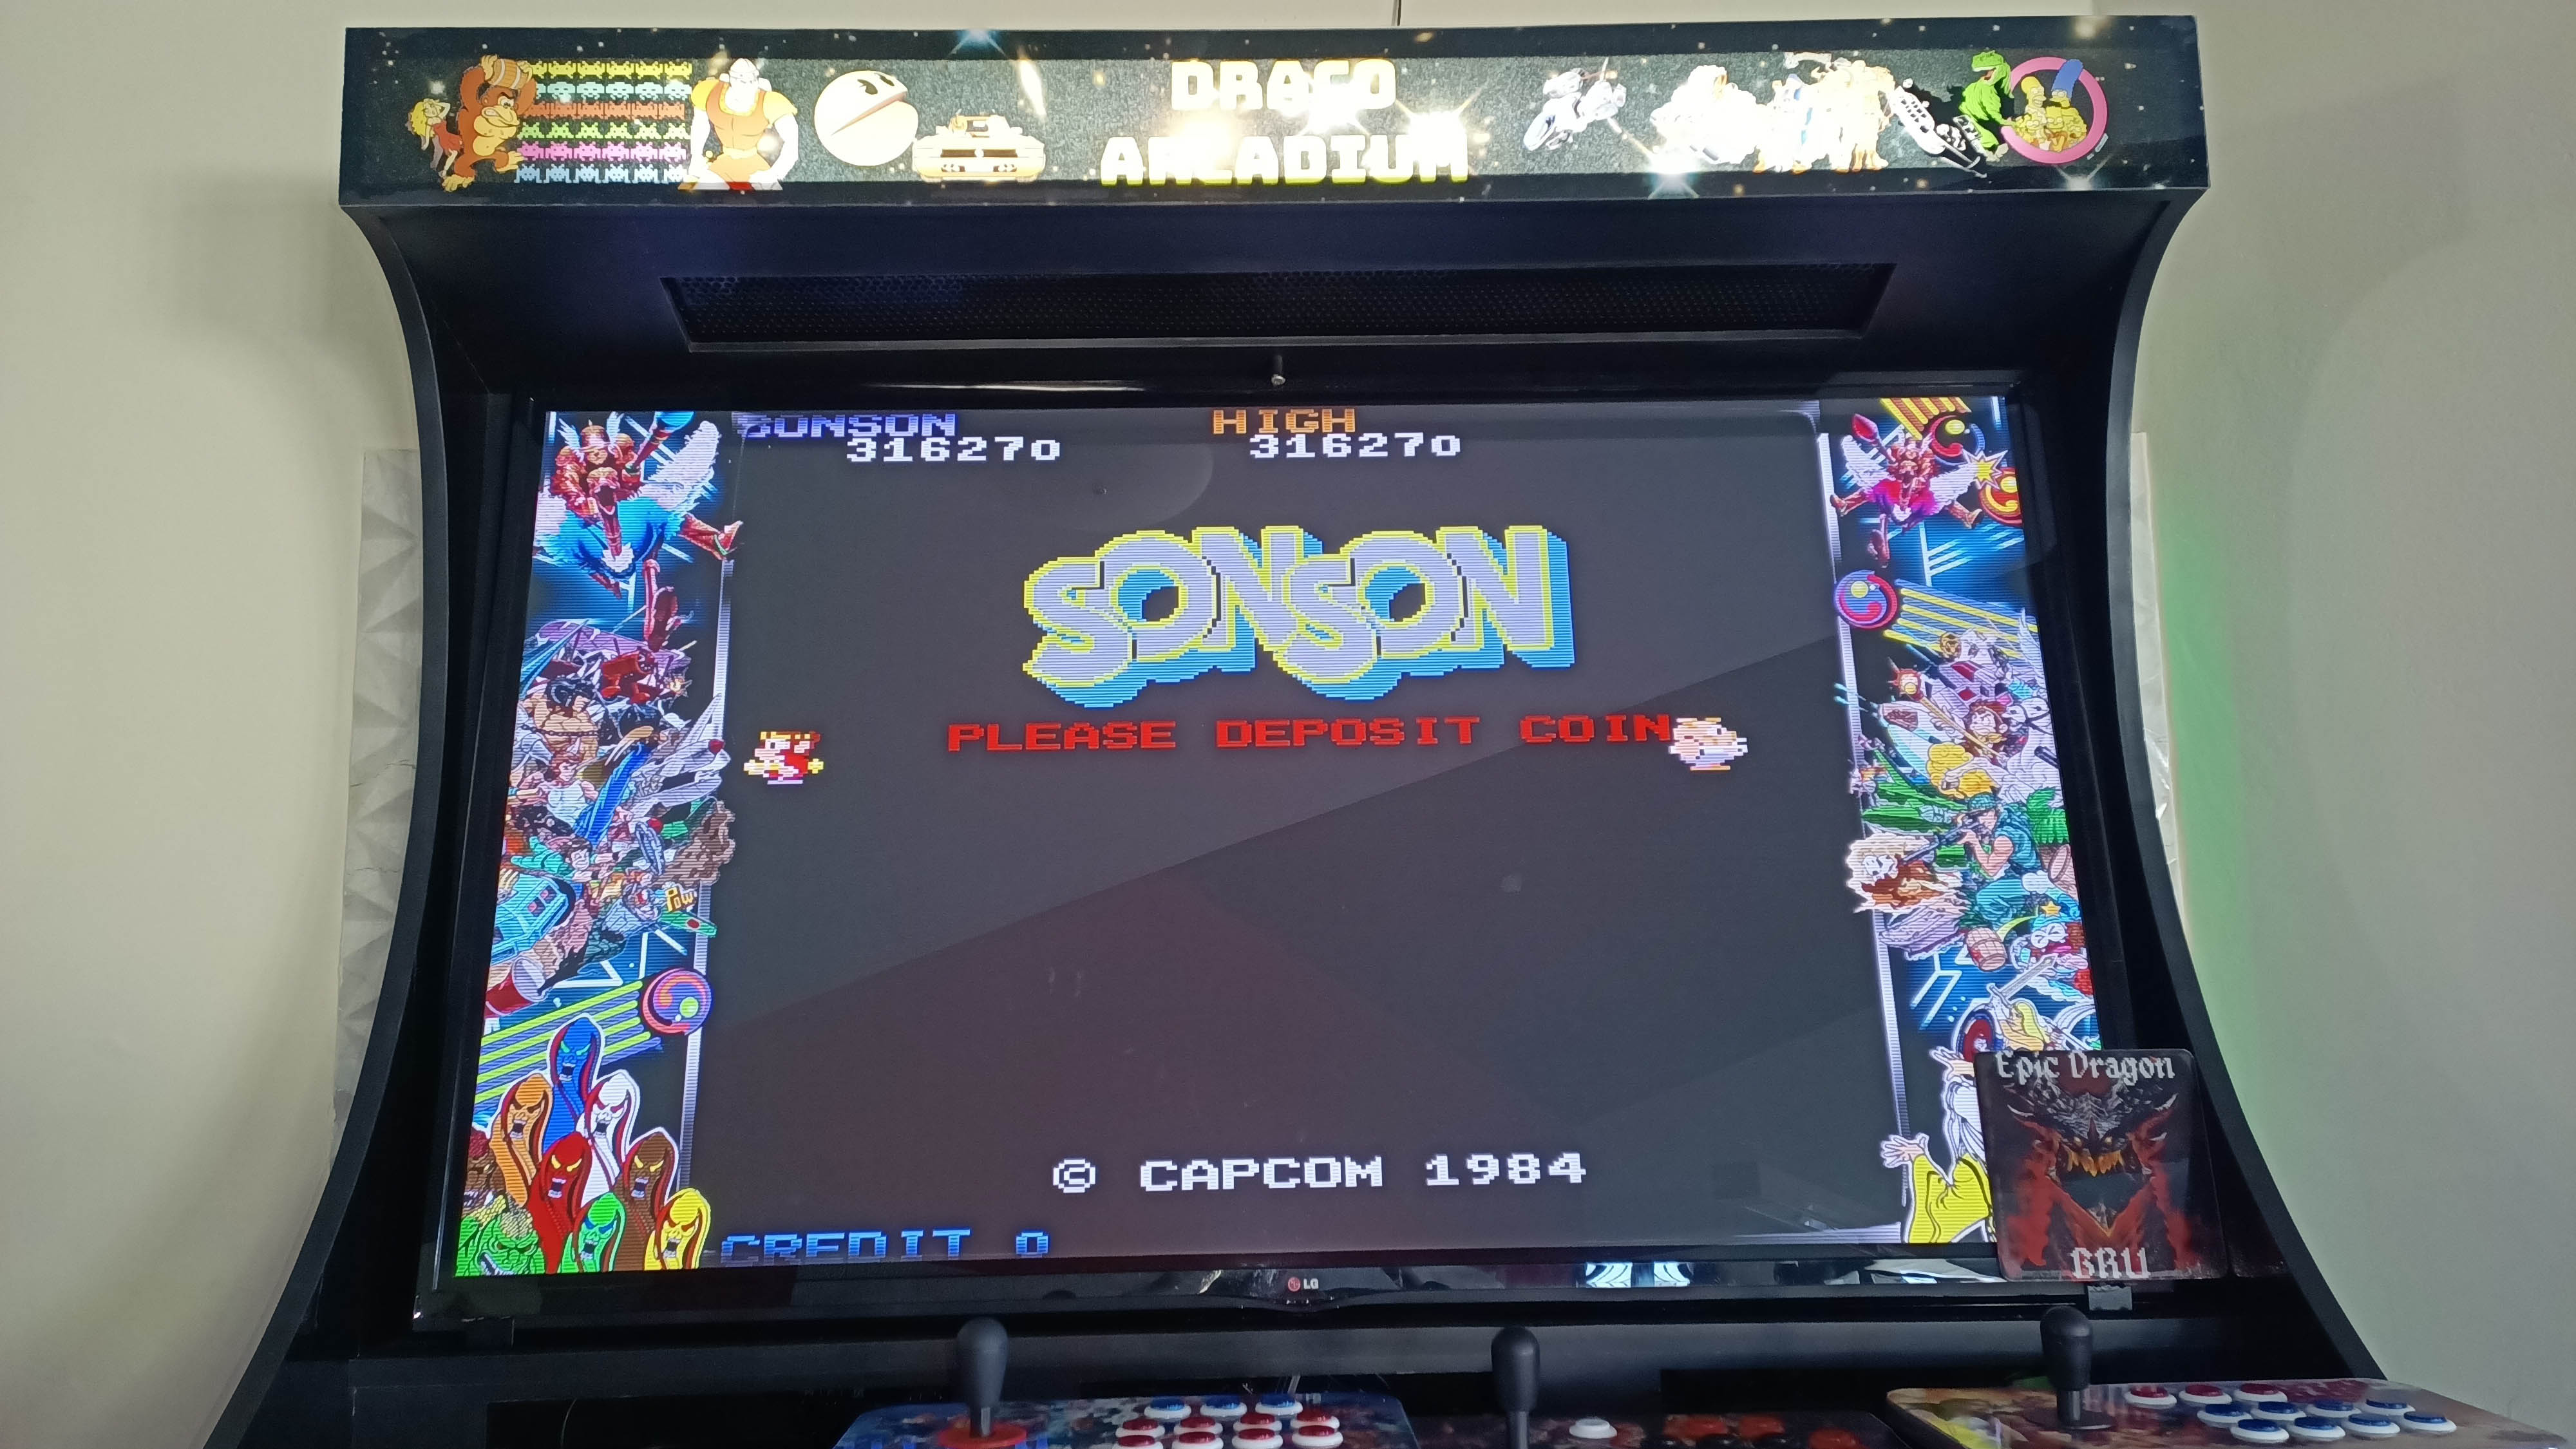 EpicDragon: SonSon [sonson] (Arcade Emulated / M.A.M.E.) 316,270 points on 2022-08-28 12:07:07